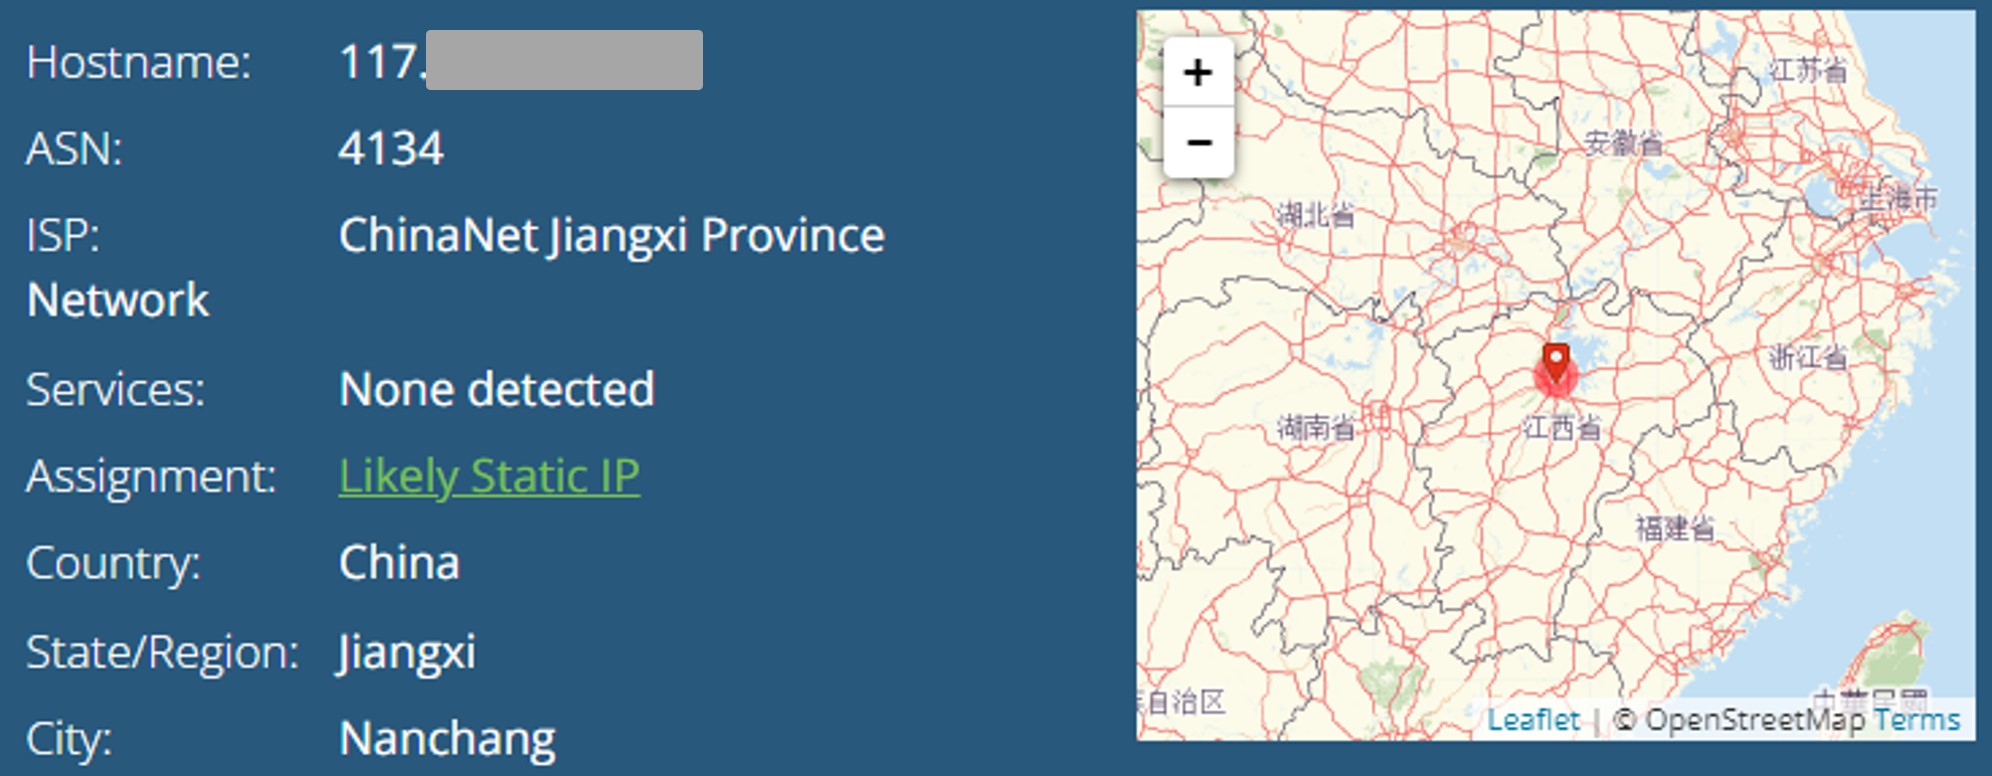 IP address in Nanchang City